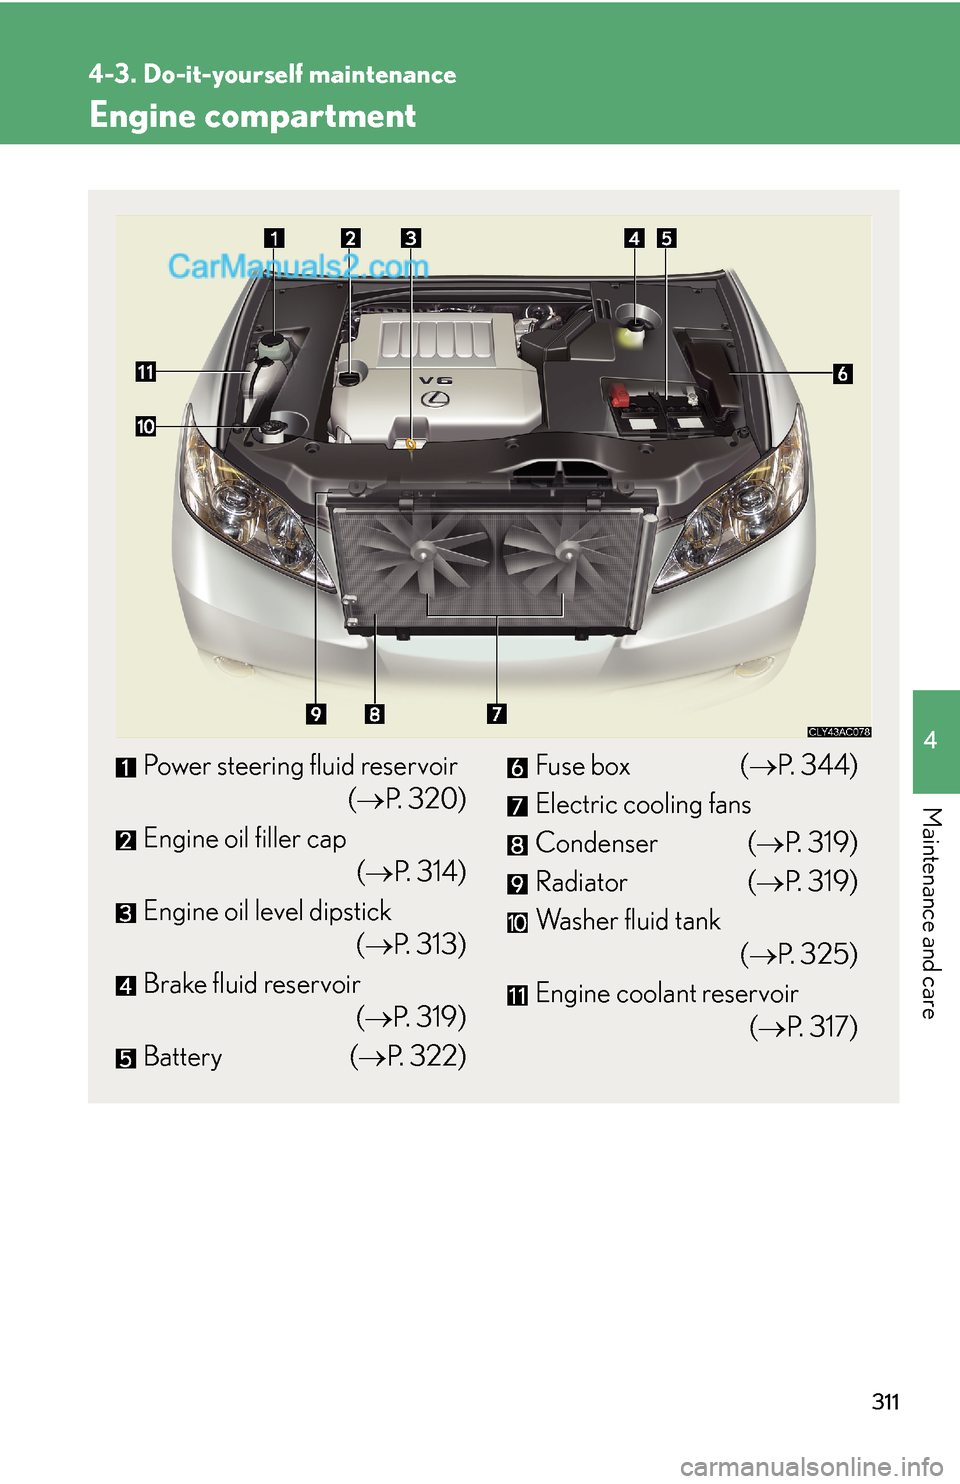 Lexus ES350 2009  Do-it-yourself maintenance 311
4-3. Do-it-yourself maintenance
4
Maintenance and care
Engine compartment
Power steering fluid reservoir
(→P. 320)
Engine oil filler cap
(→P. 314)
Engine oil level dipstick
(→P. 313)
Brake f